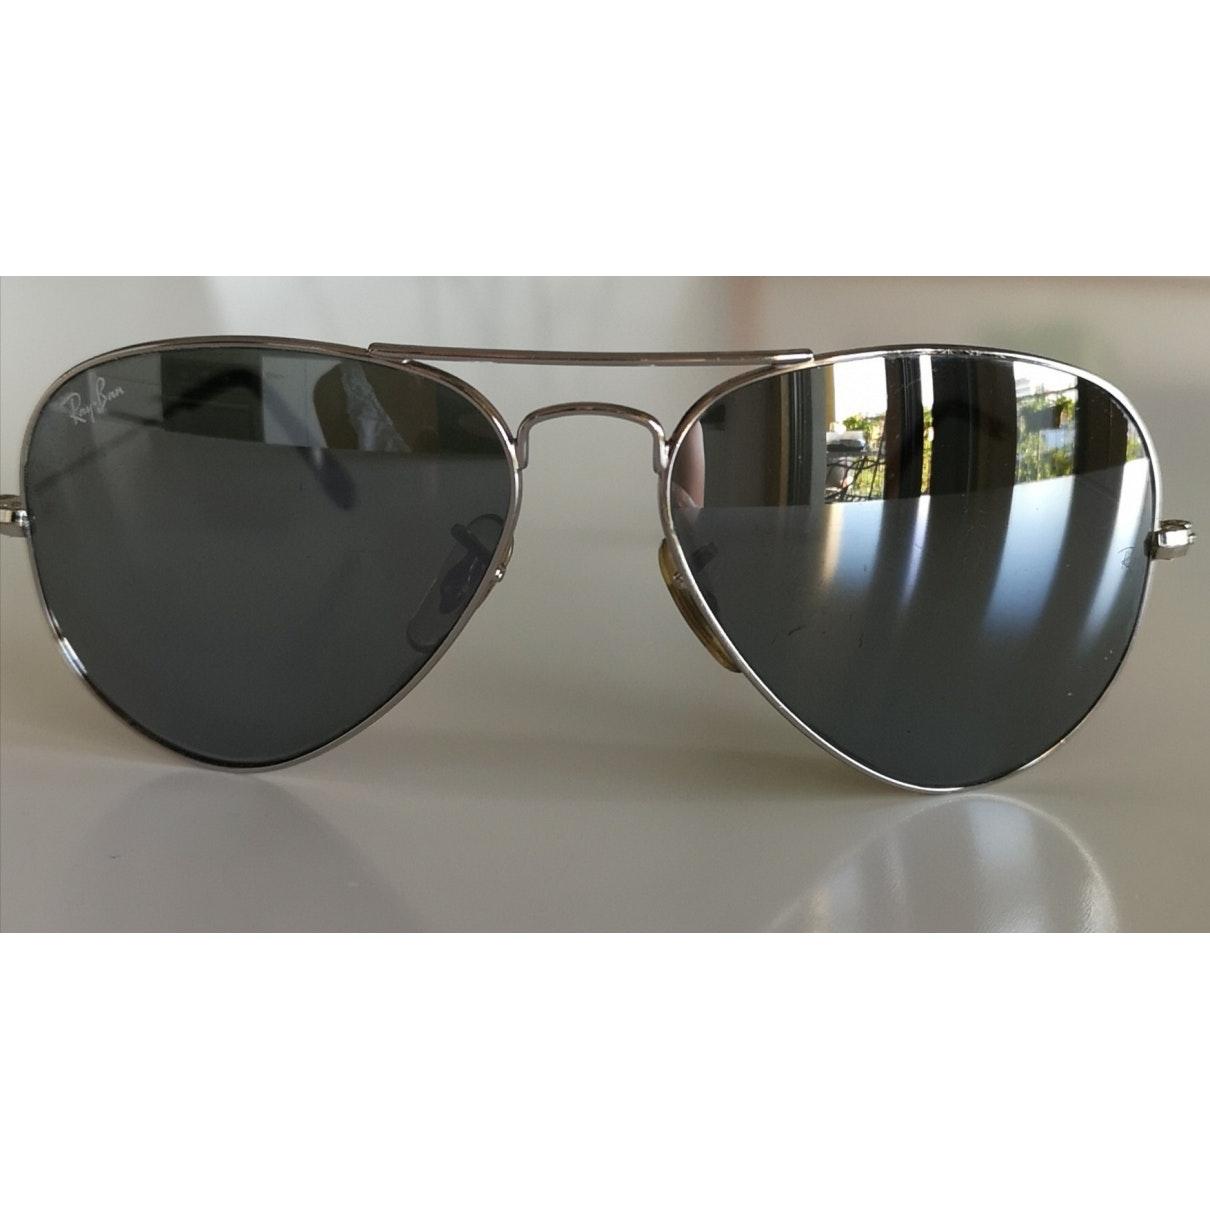 Ray-Ban Aviator Sunglasses in Silver (Metallic) - Lyst